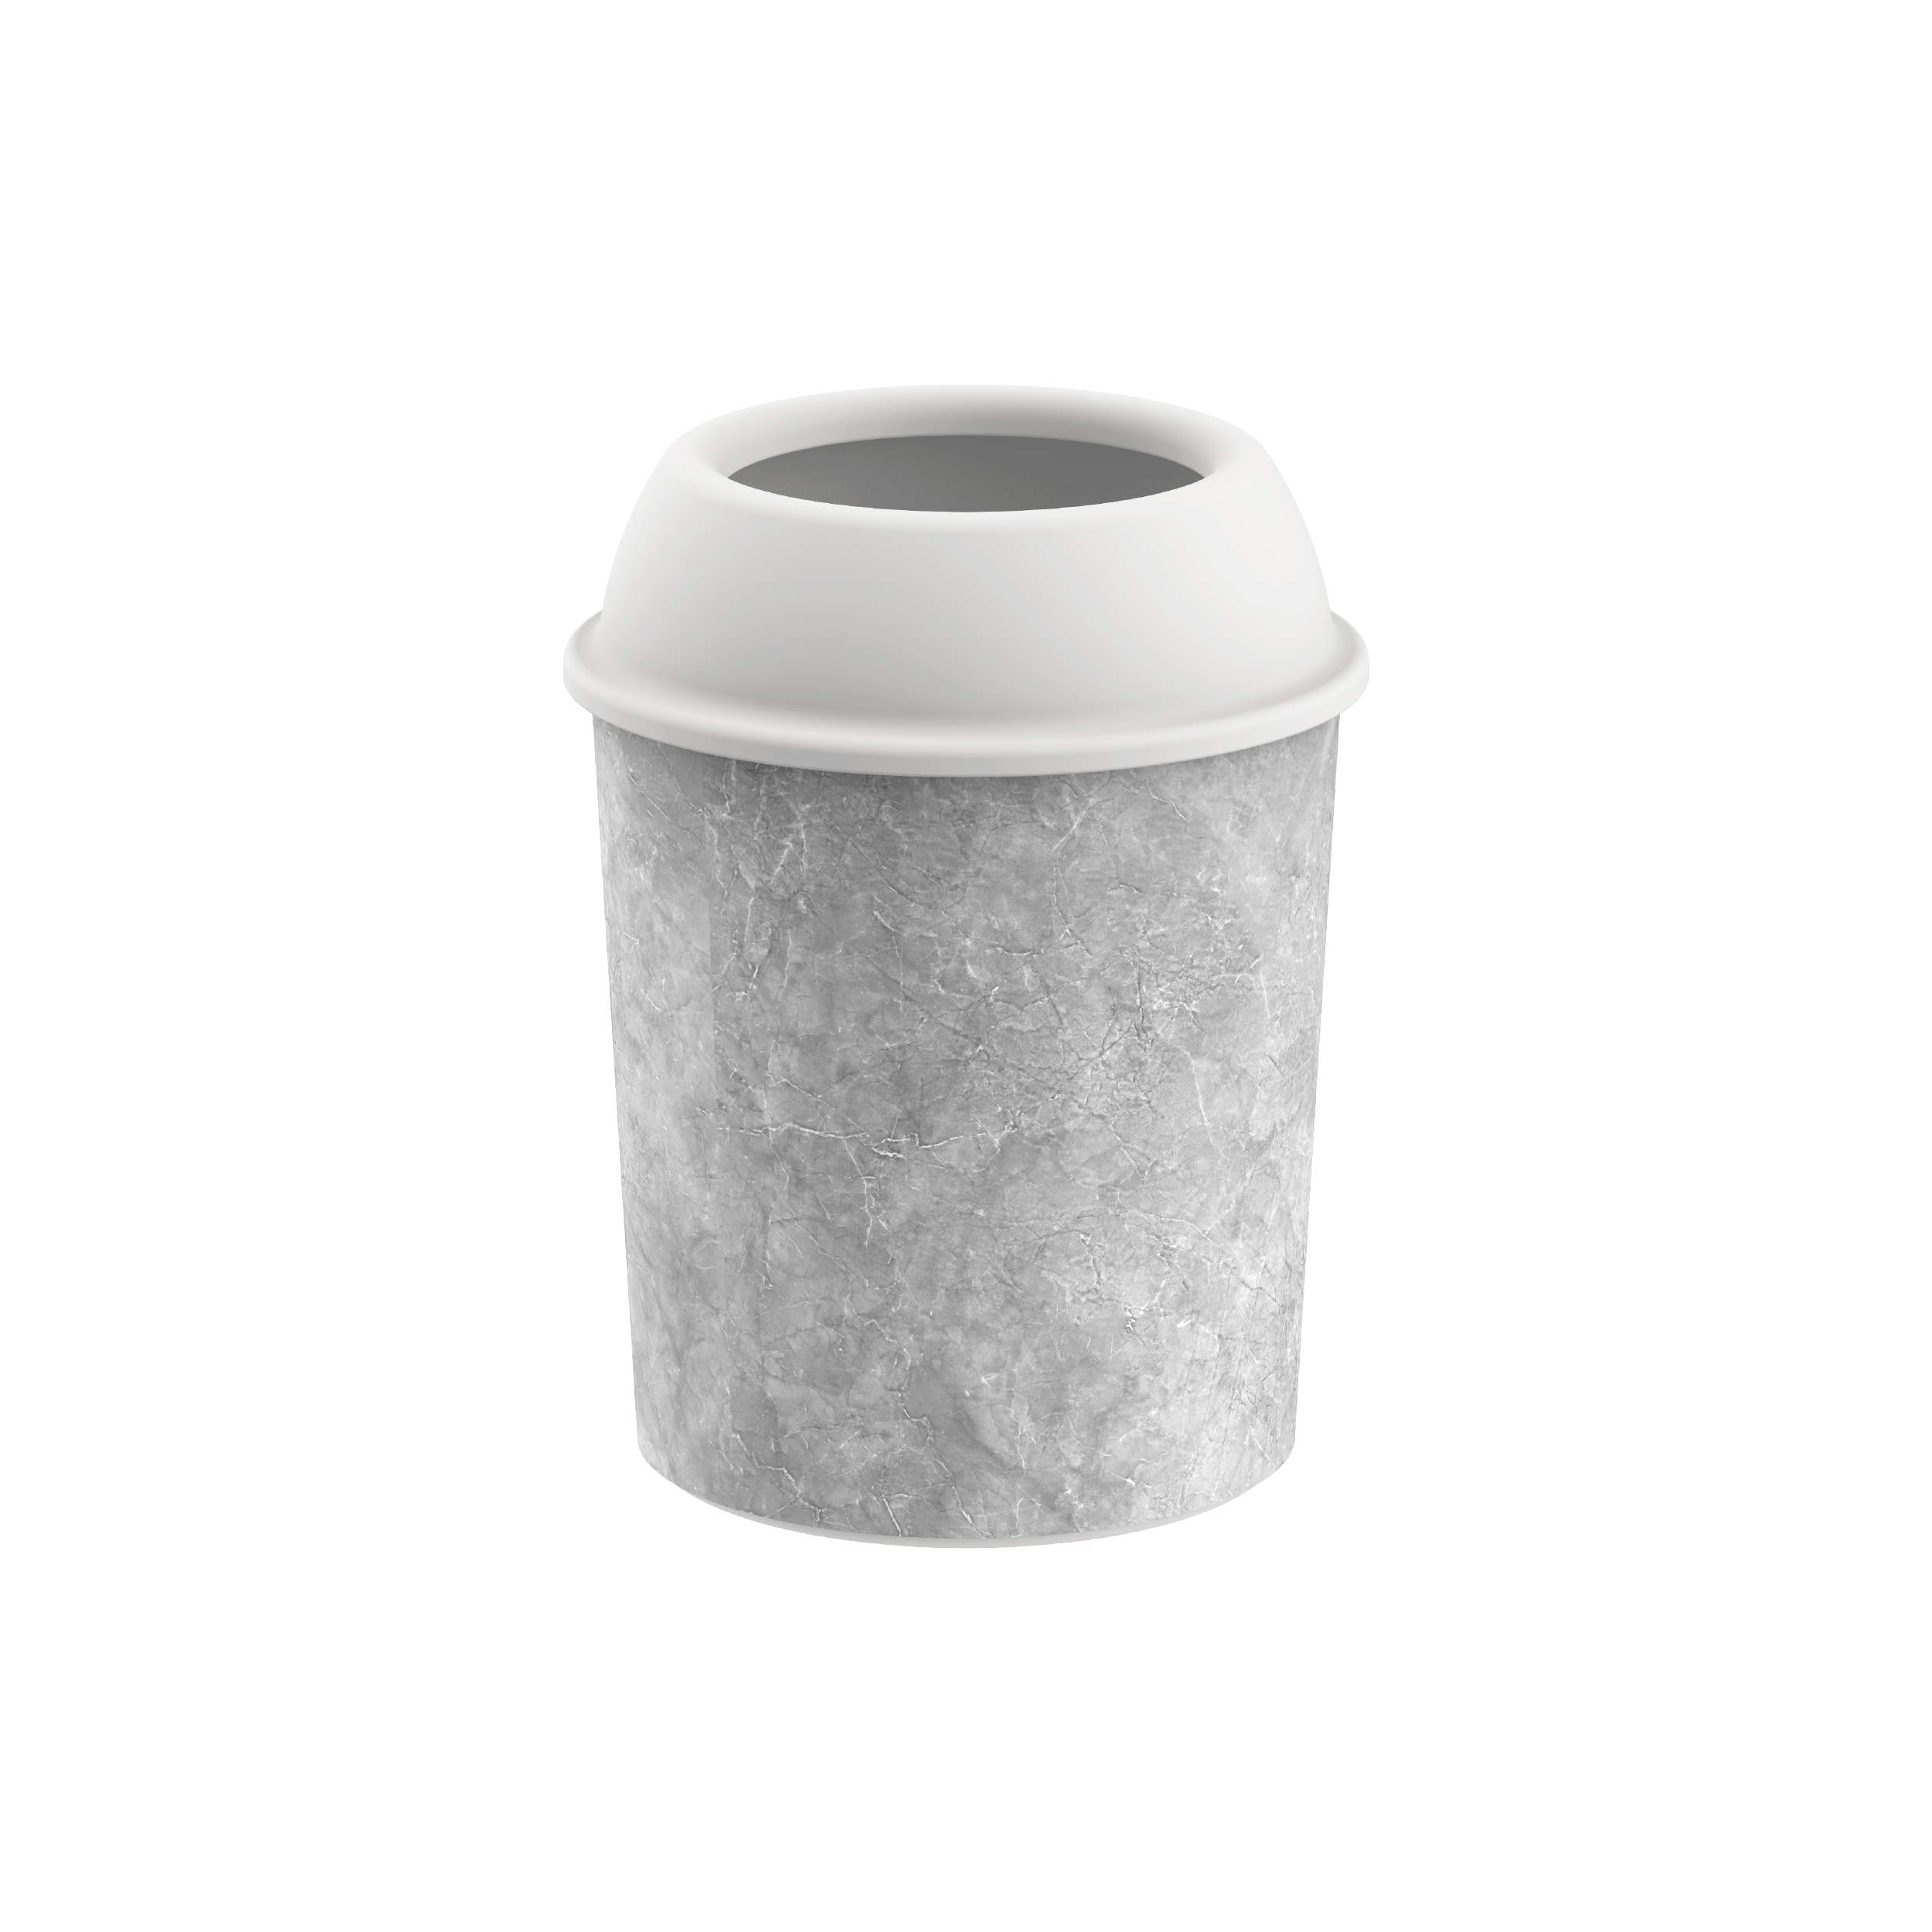 Ceramic 5L Round Dust Bin